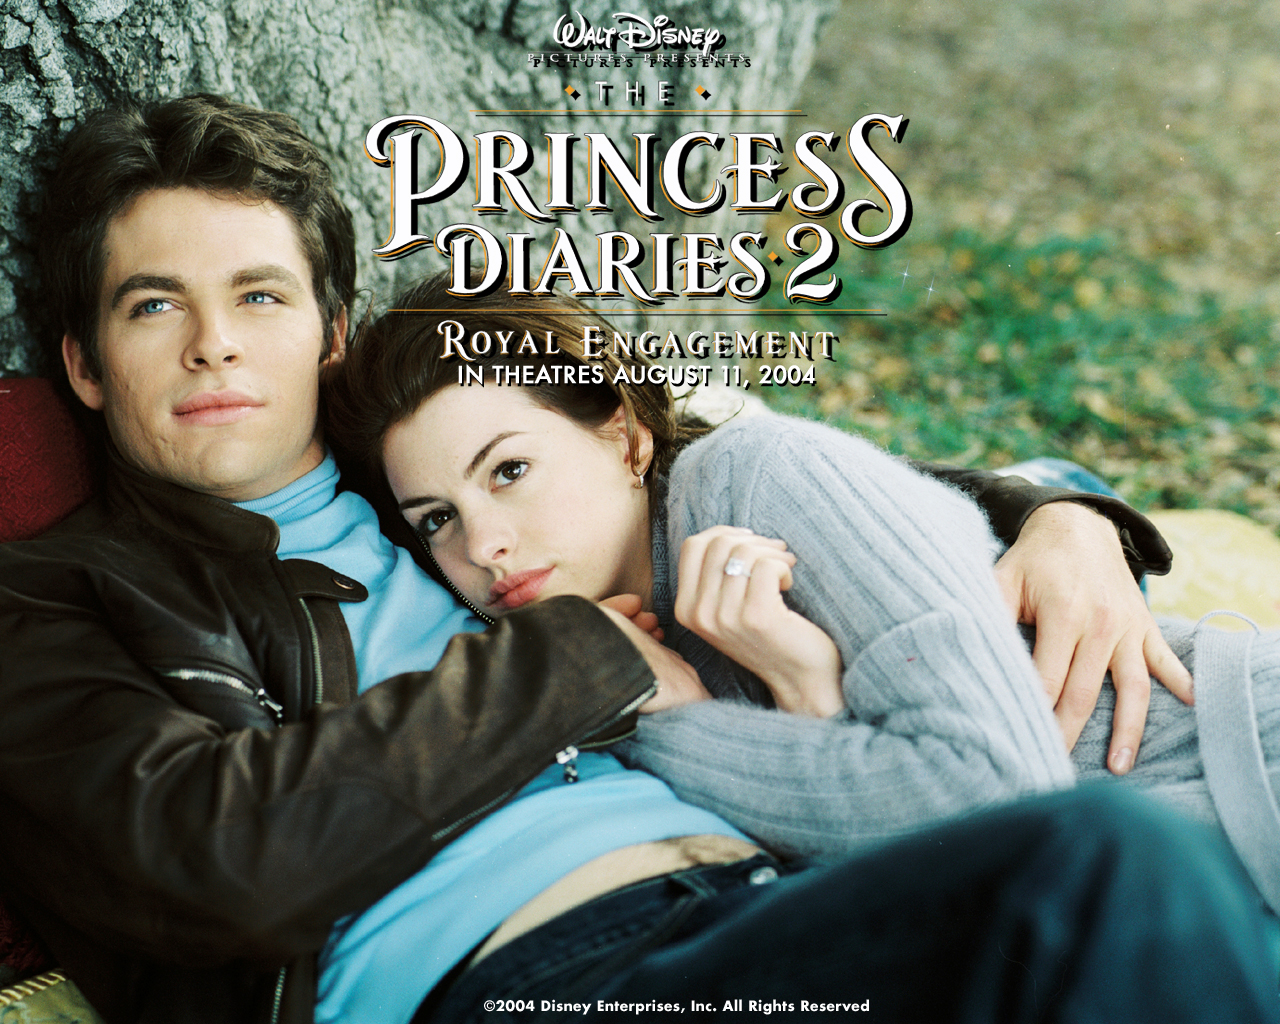 The Princess Diaries 2: Royal Engagement 2004 Full